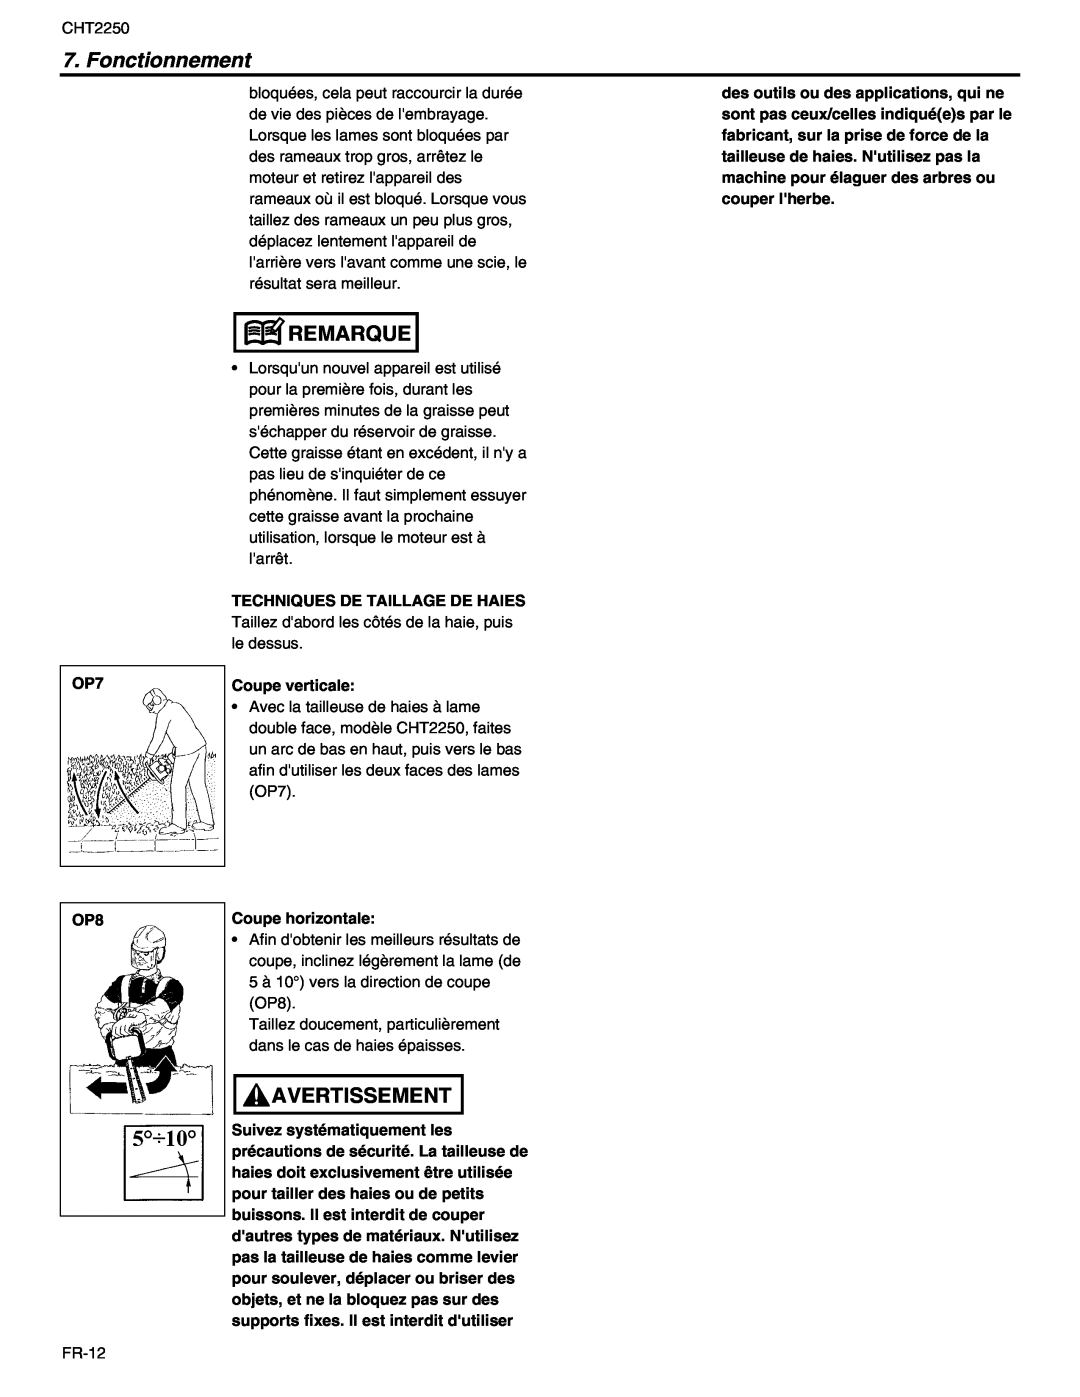 RedMax CHT2250 manual Fonctionnement, Remarque, Avertissement 